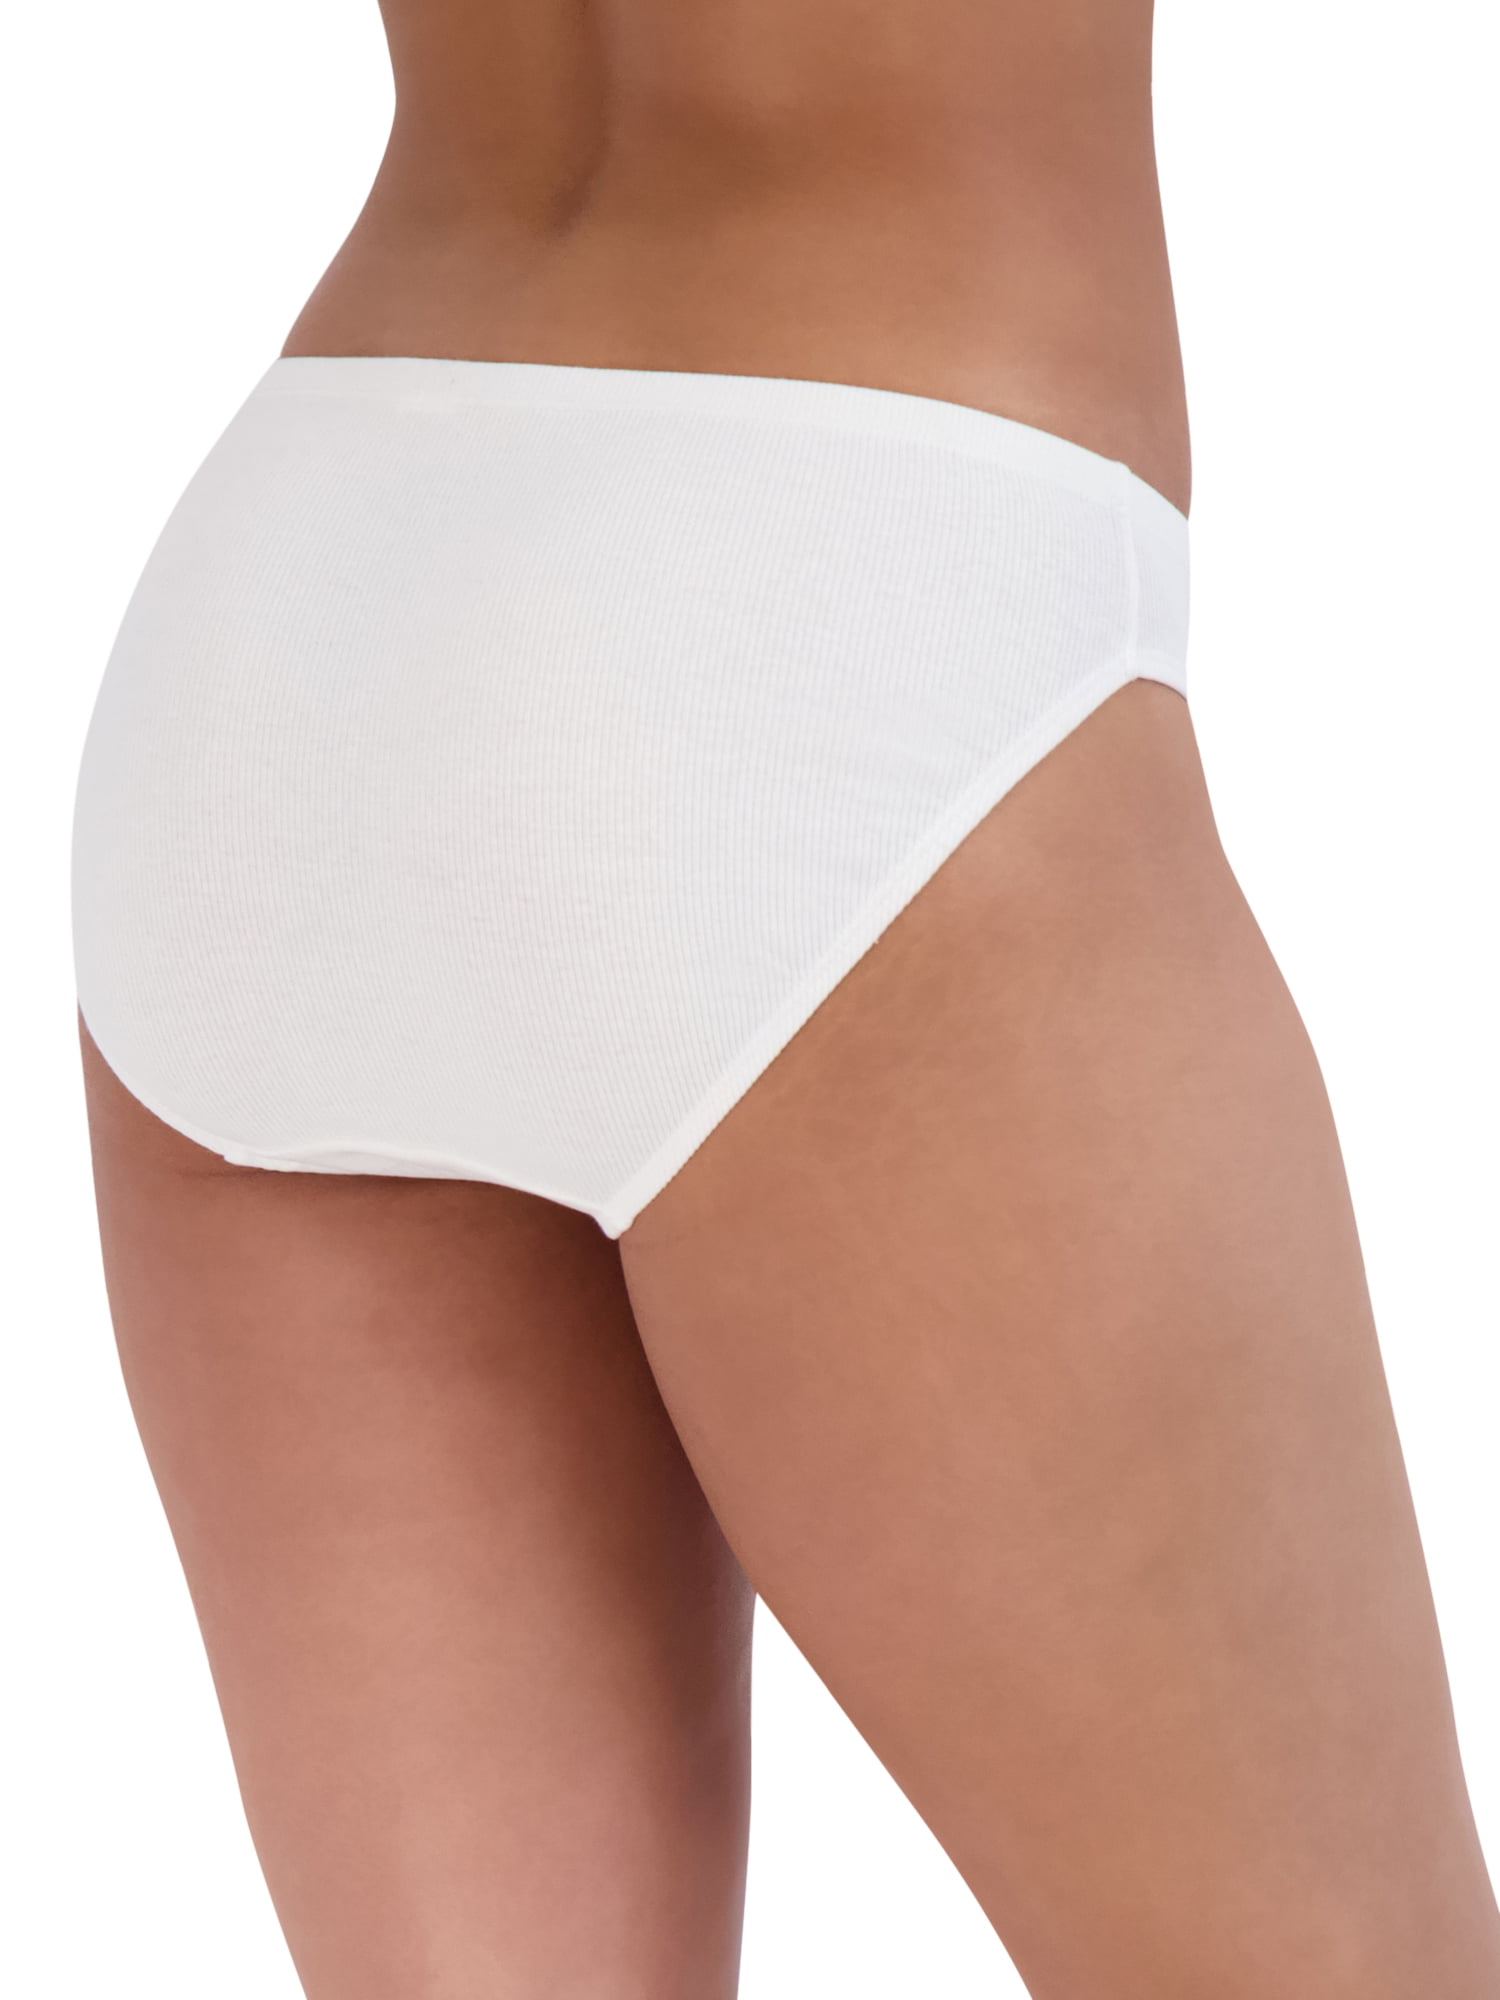 Best Fitting Panty Women's Cotton Stretch Rib Bikini, 4 Pack